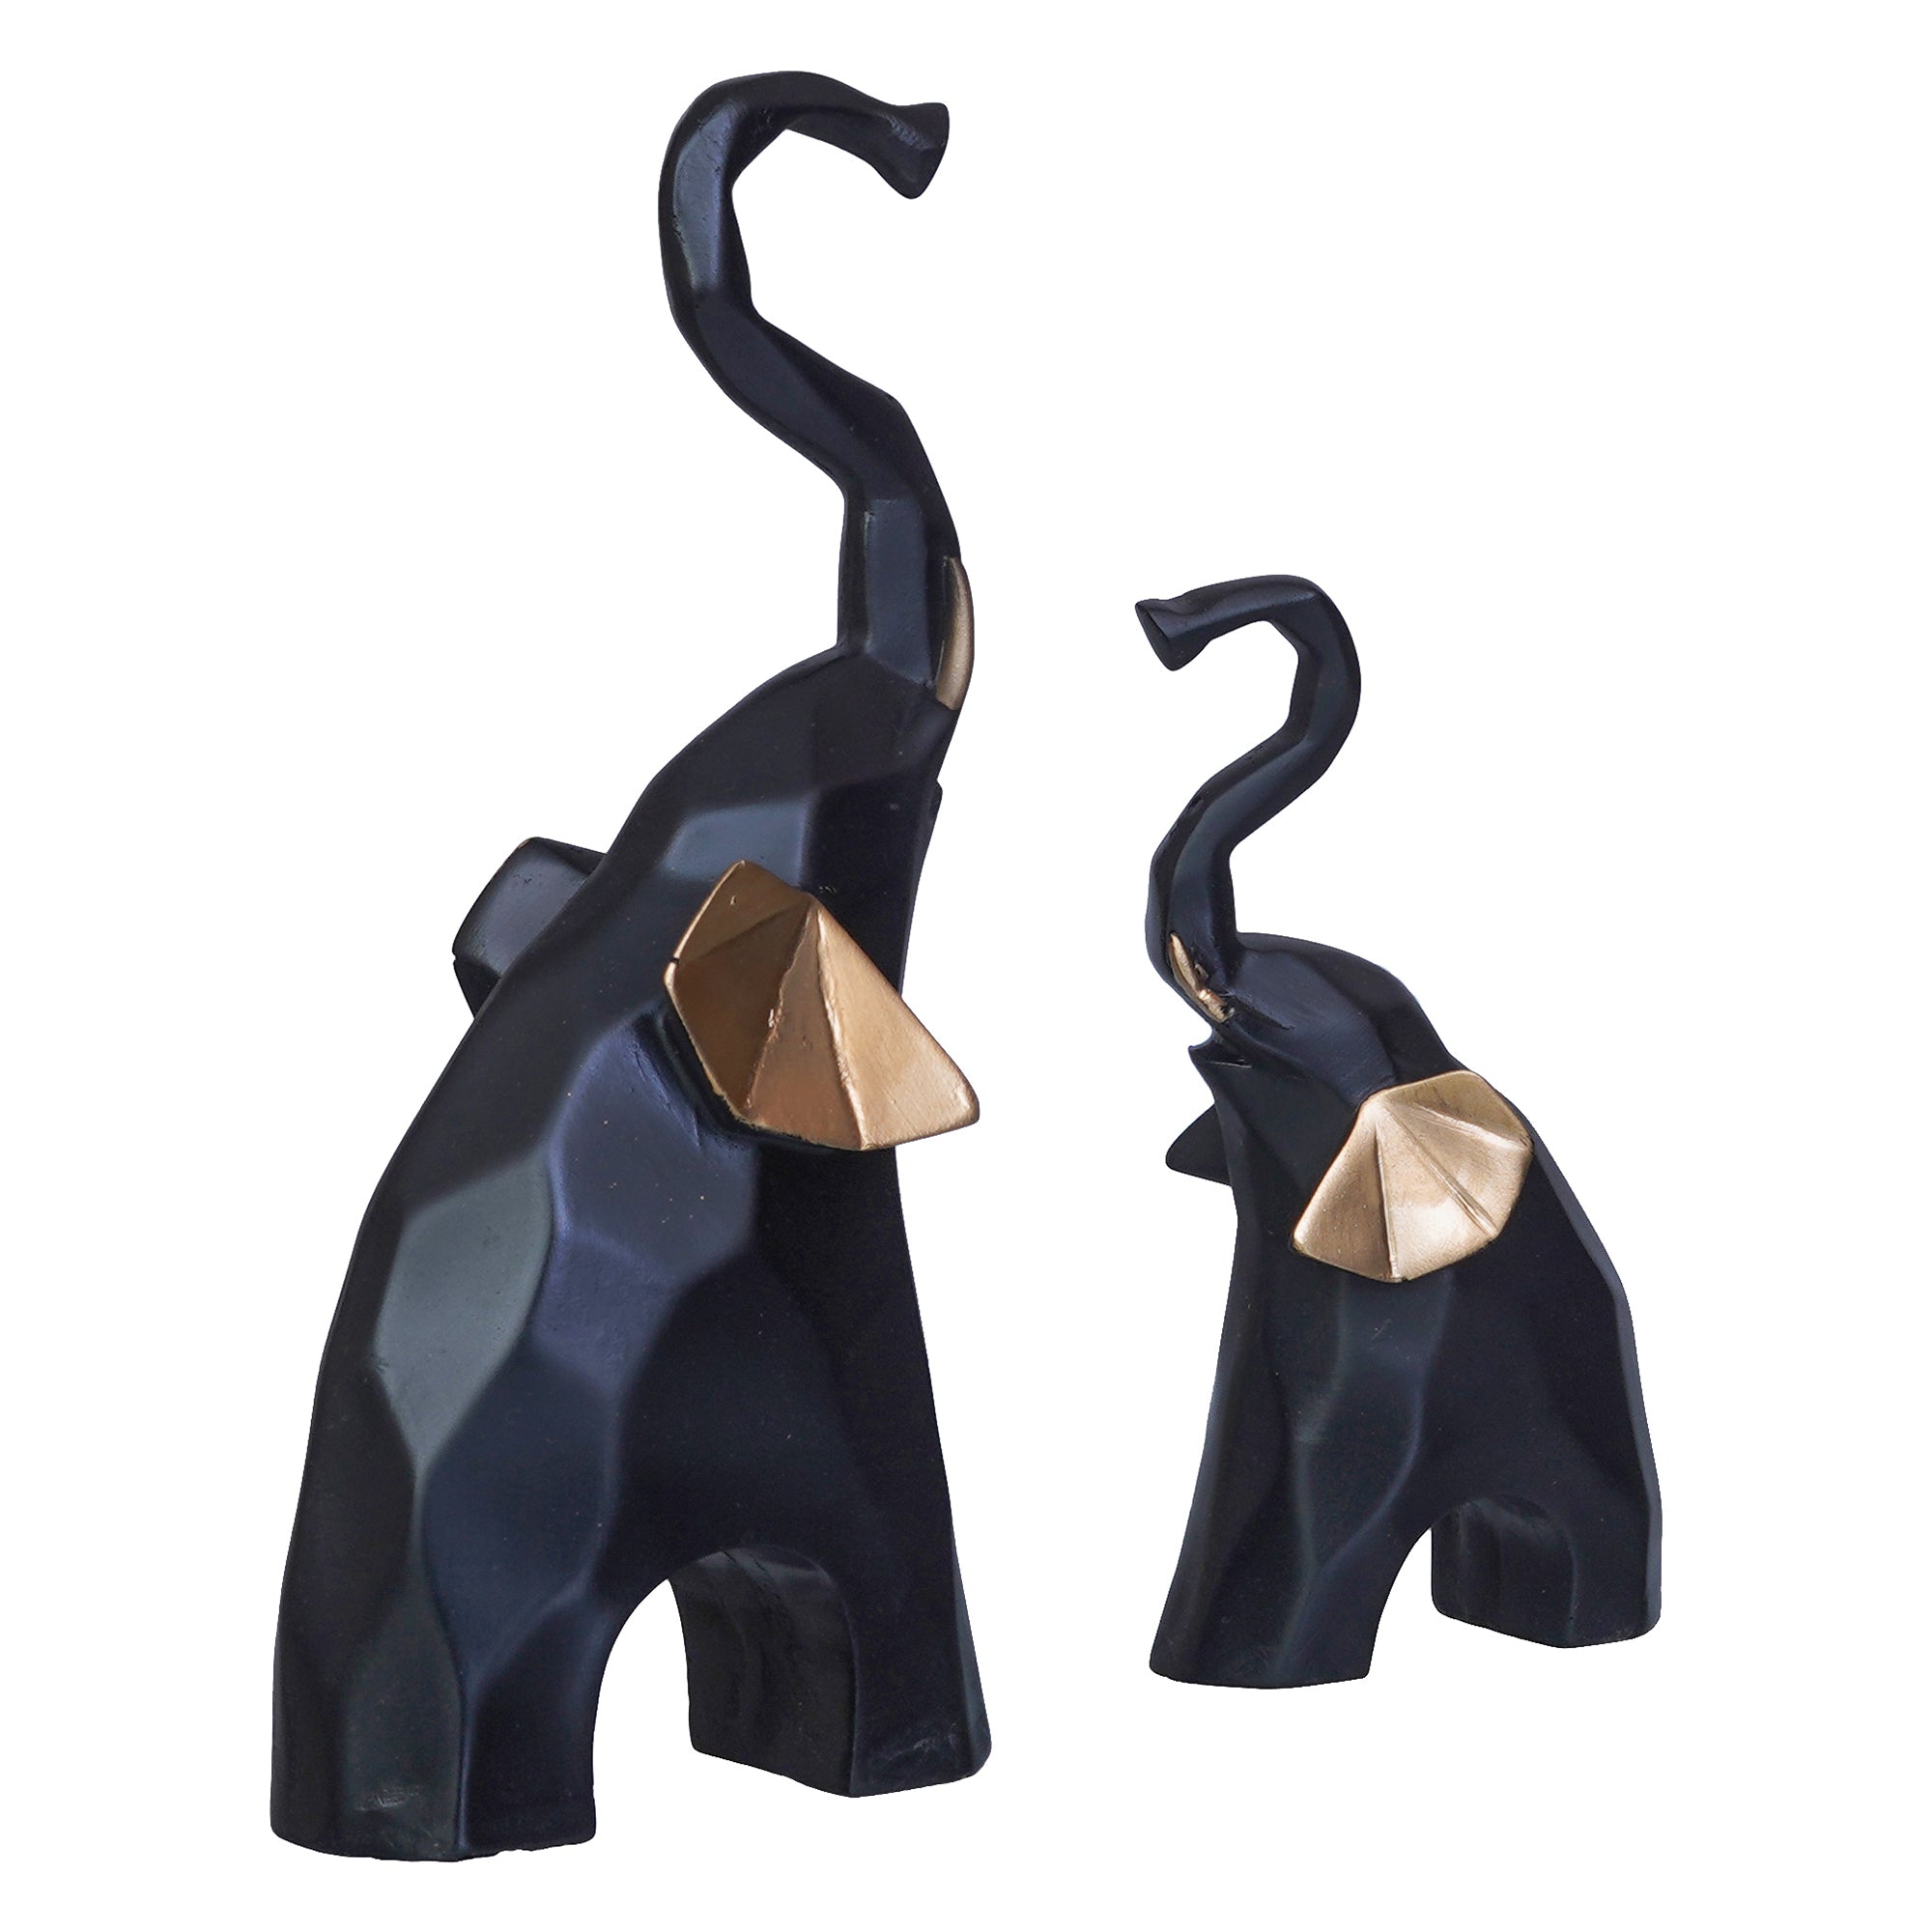 Set of 2 Gold & Black Elephant Statues Decorative Animal Showpieces 8